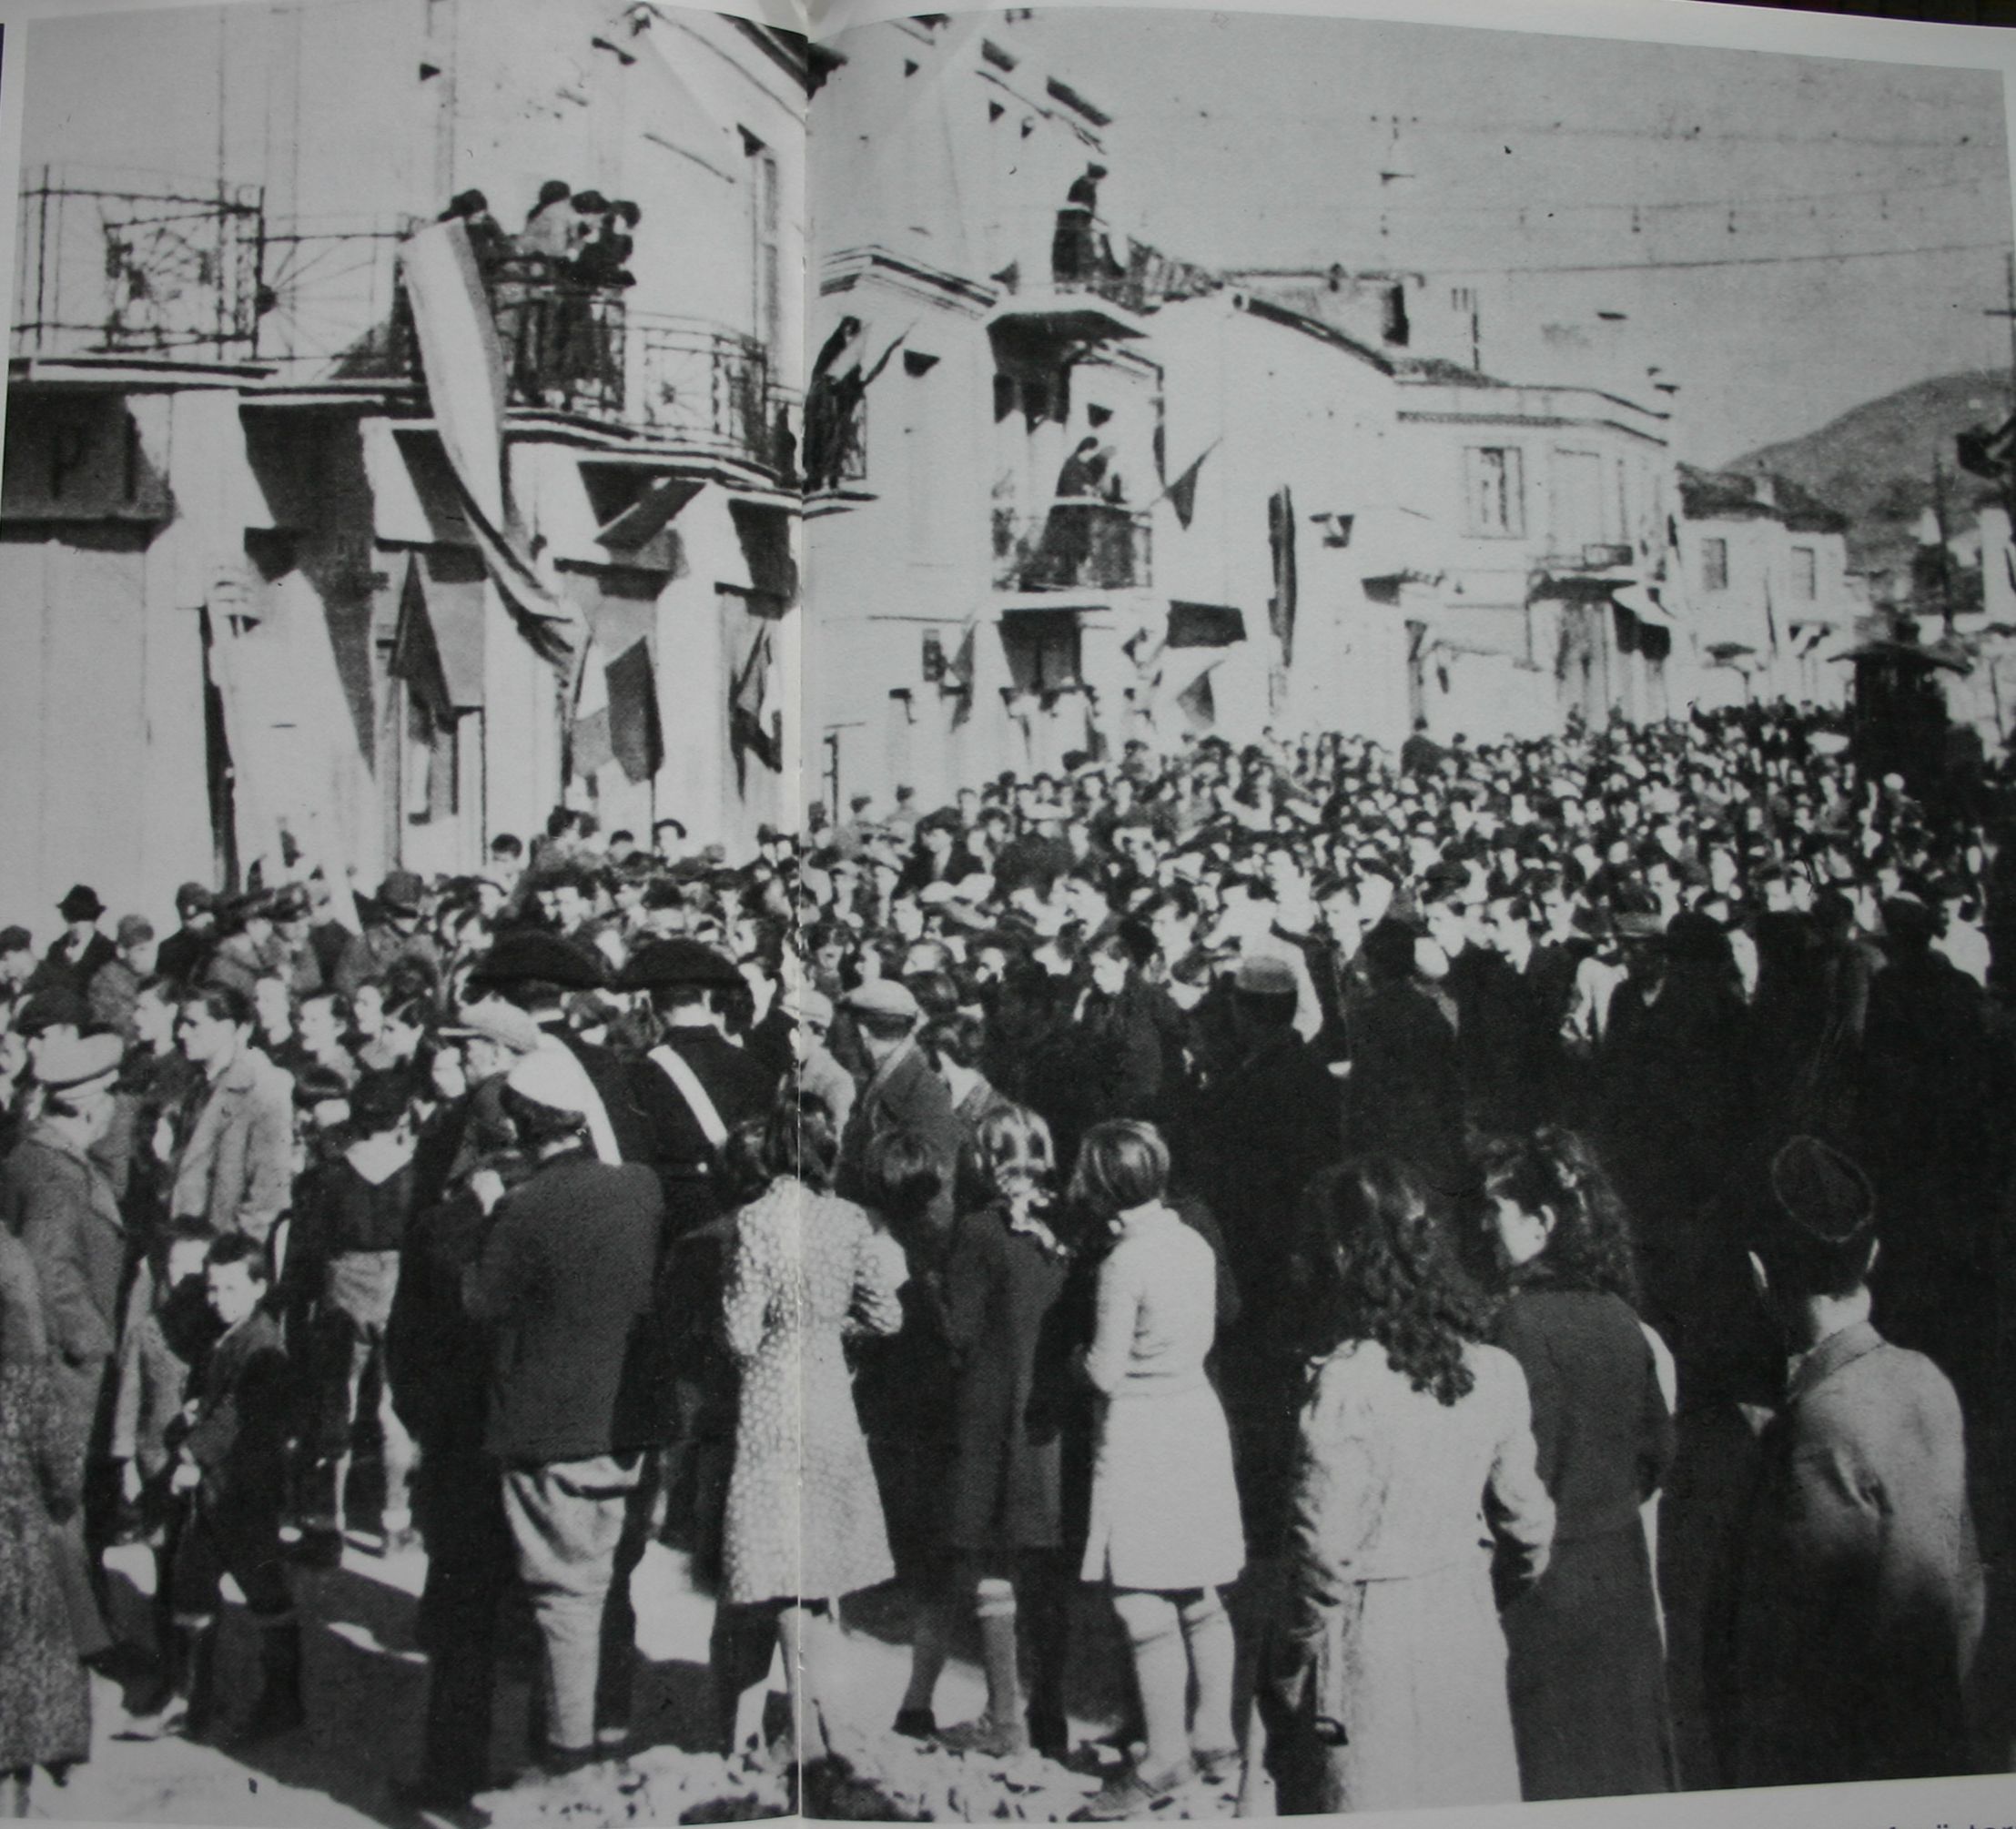 Korca anti-fascist Rally 1939